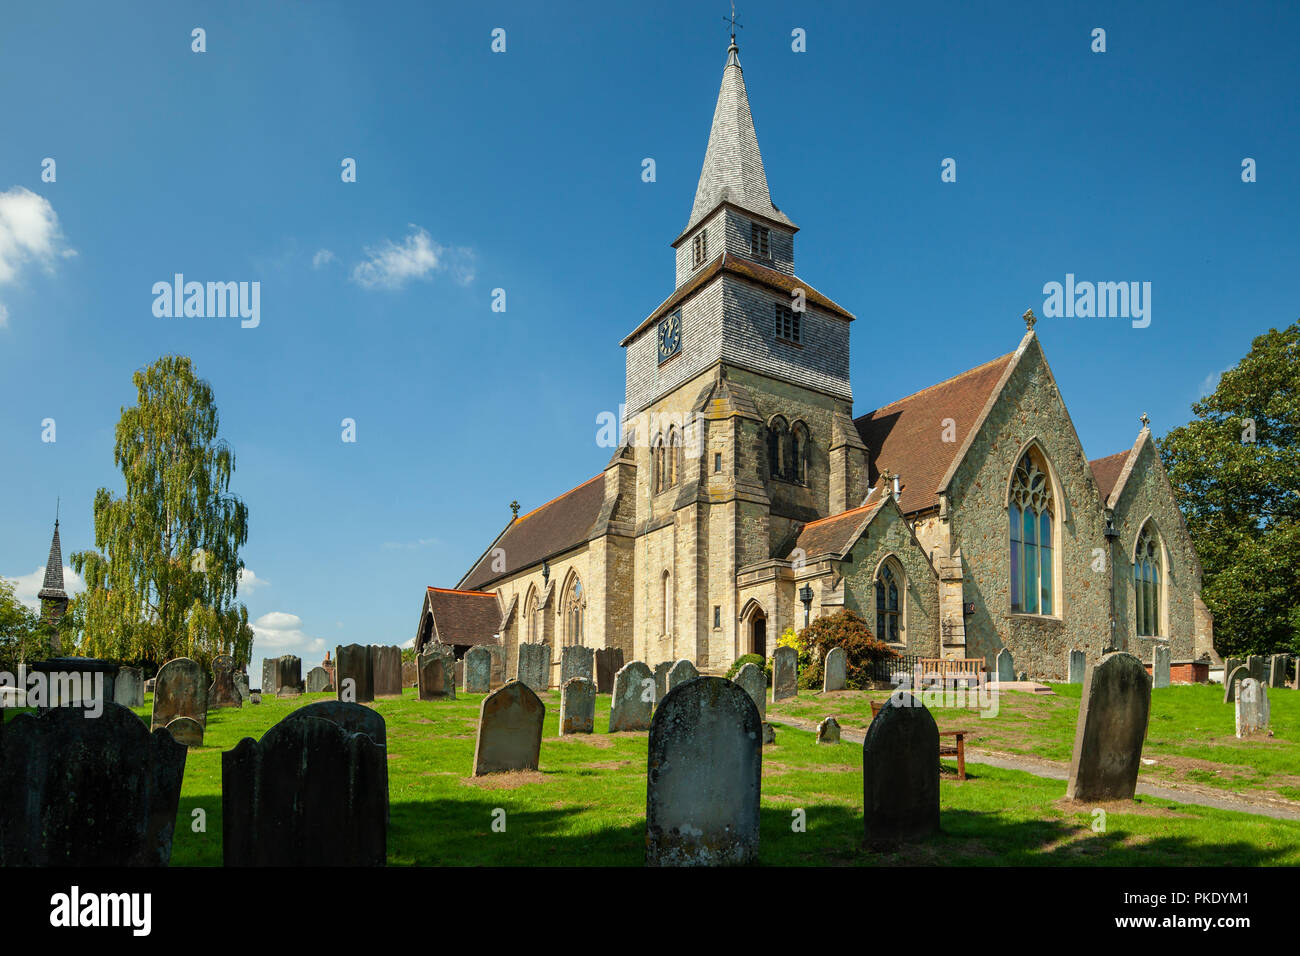 Late summer at Godstone village church in Surrey, England. Stock Photo